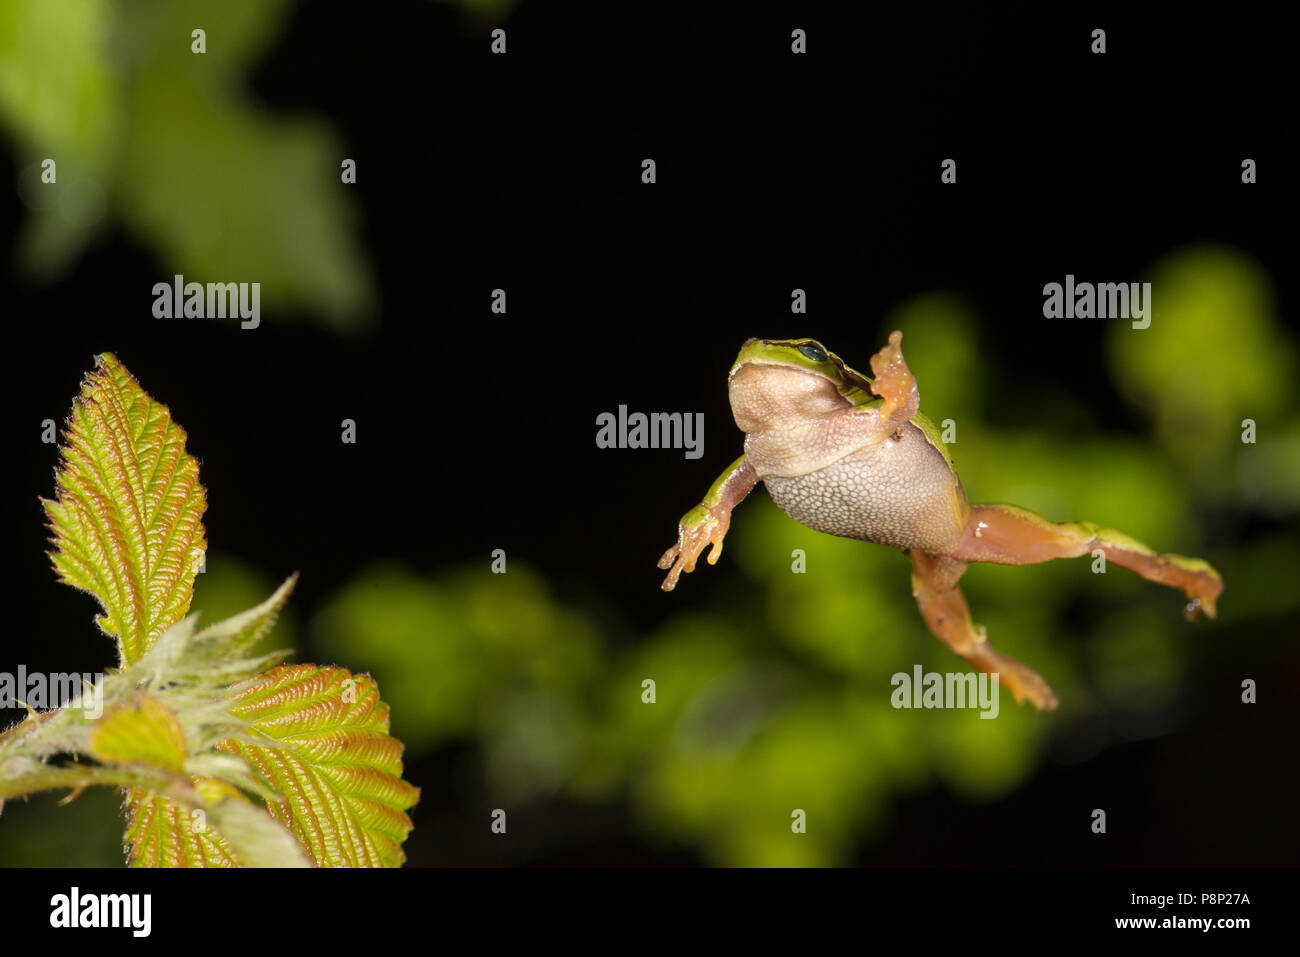 Leaping European tree frog Stock Photo